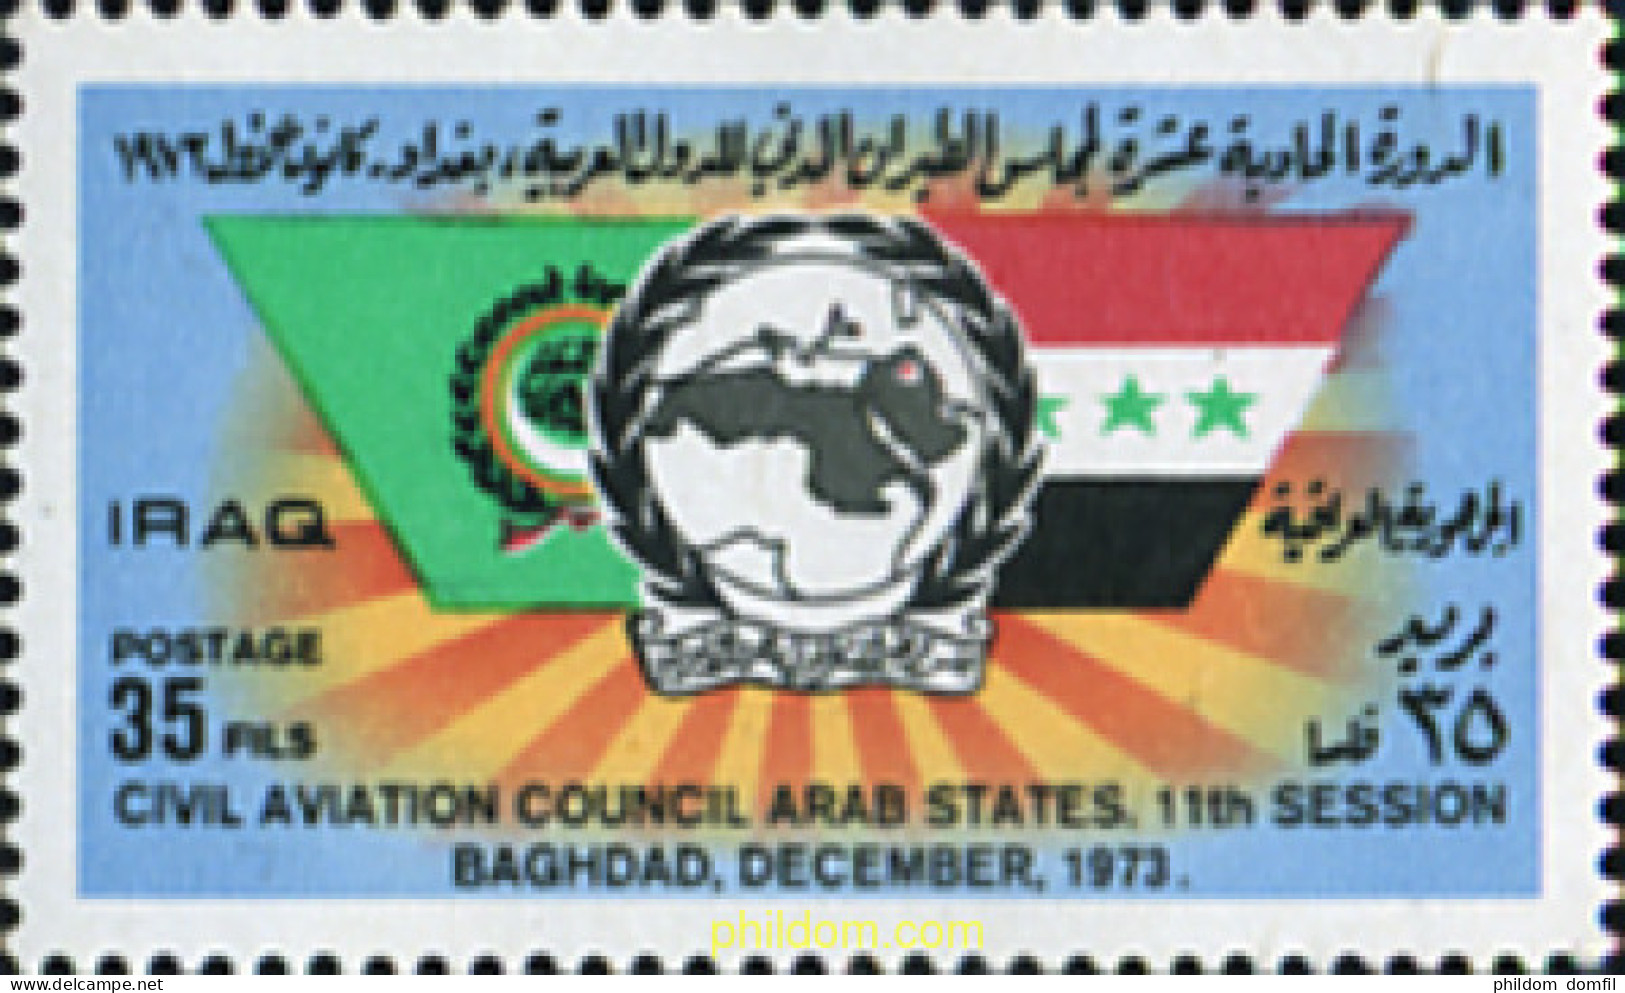 726975 MNH IRAQ 1973 AVIACION CIVIL - Irak